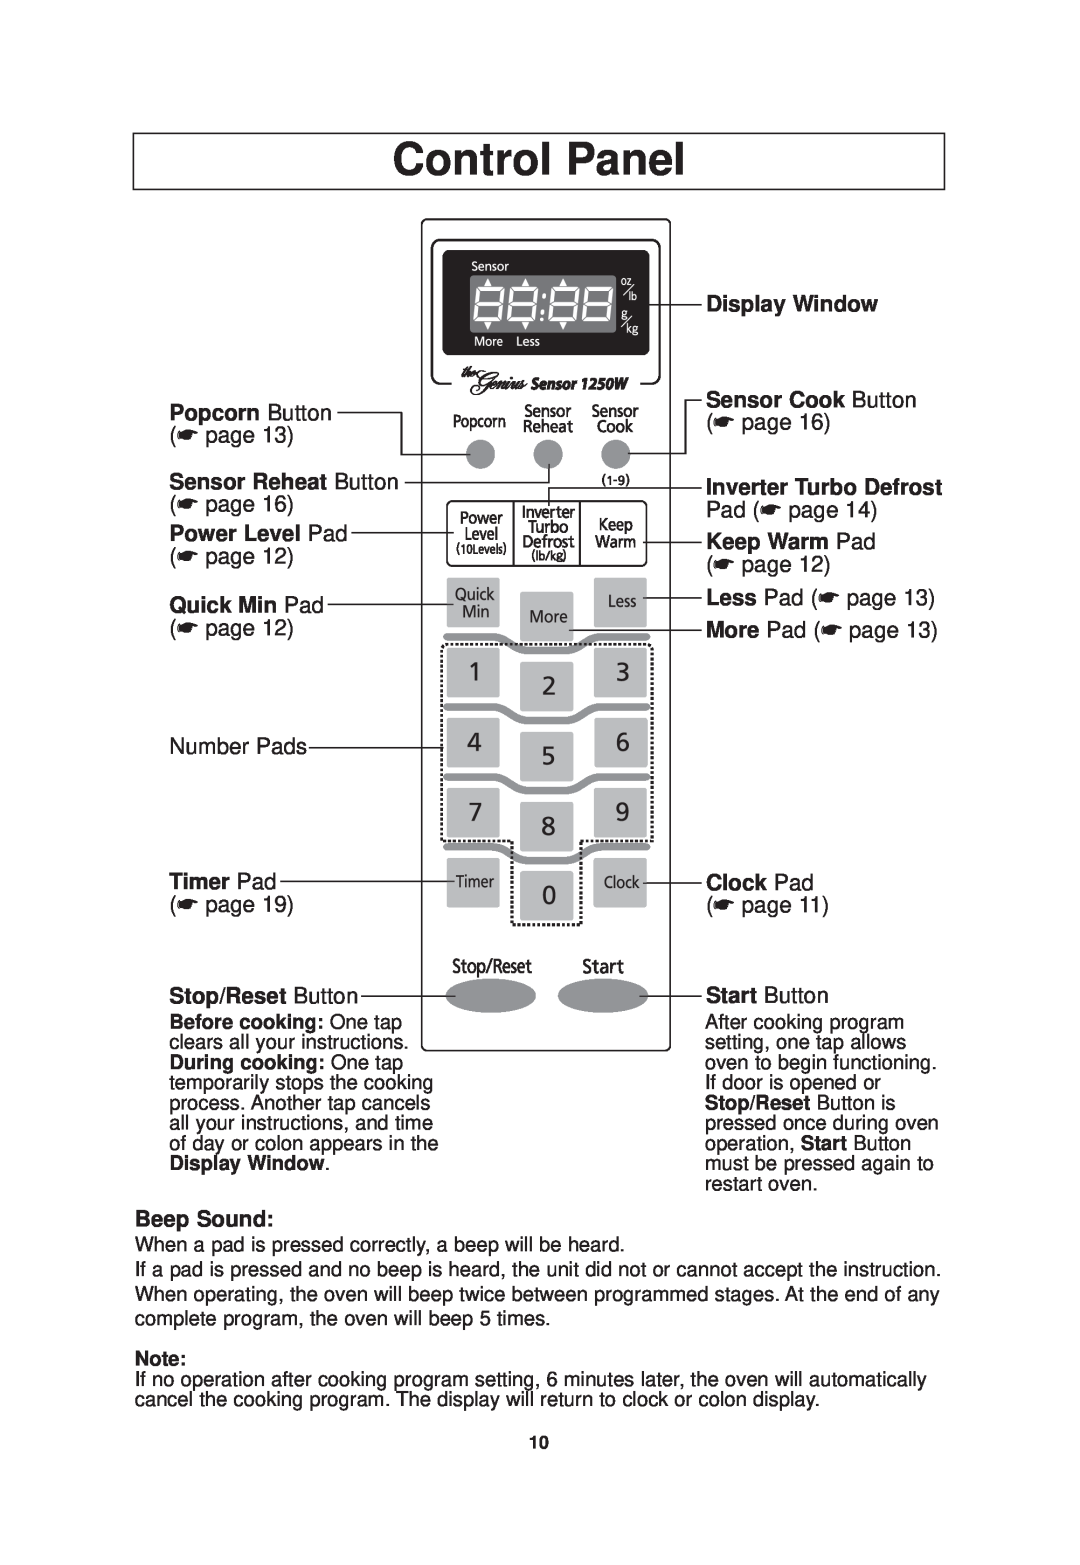 Panasonic NN-SN968 operating instructions Control Panel 